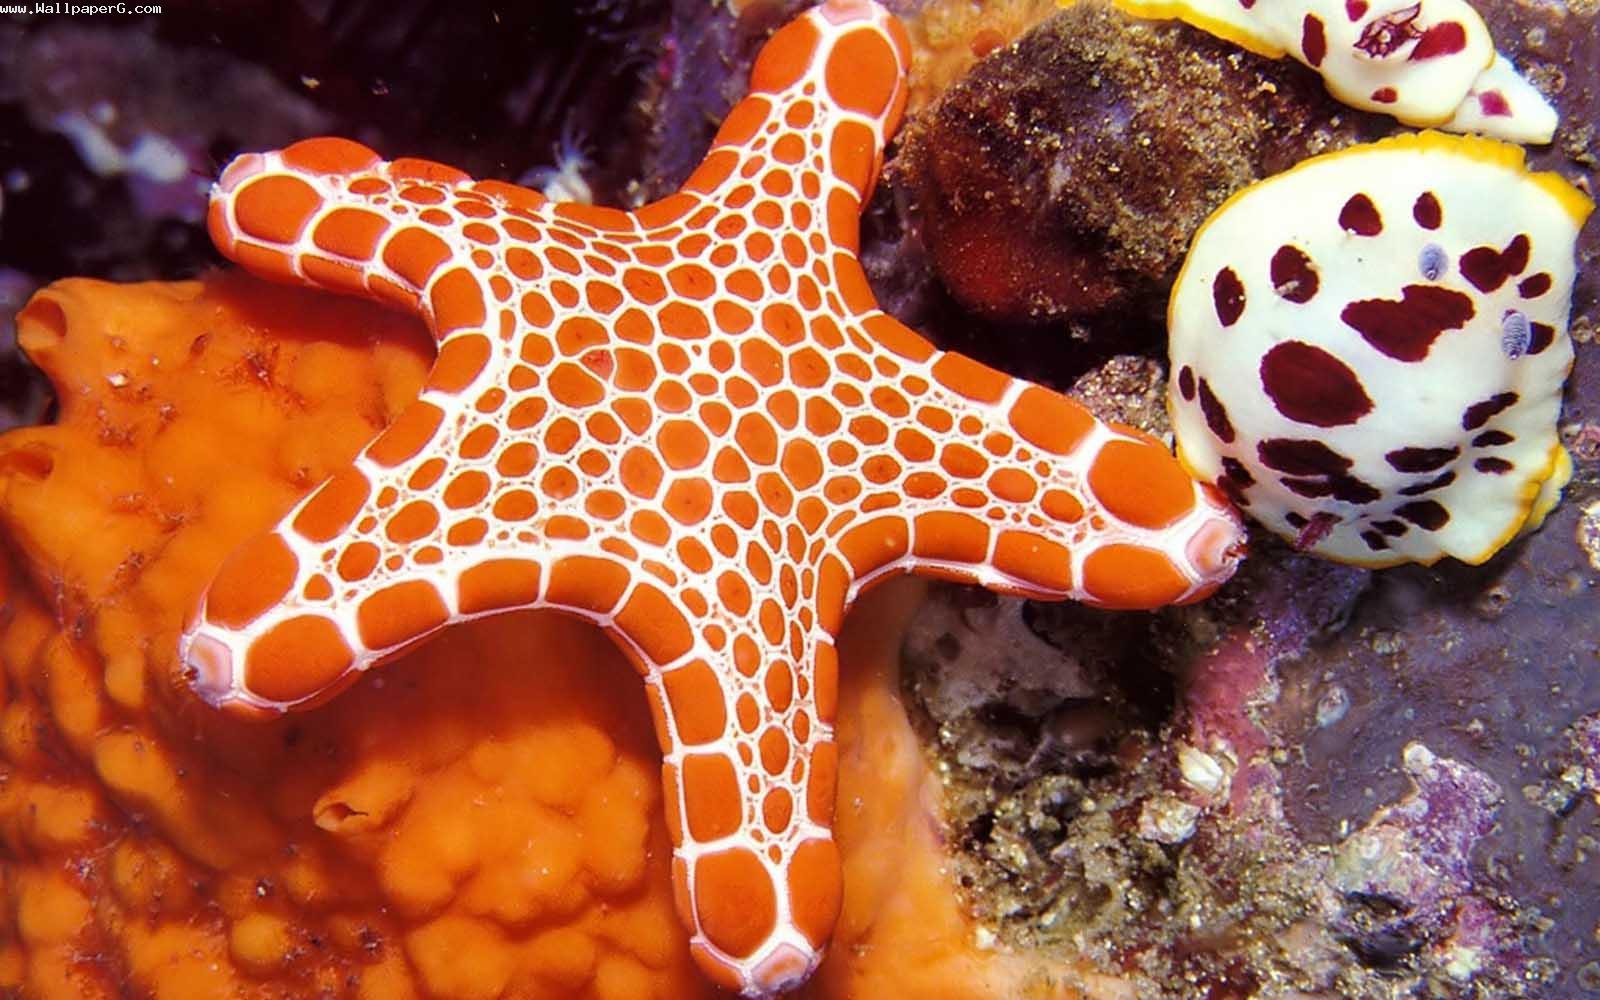 Orange star fish